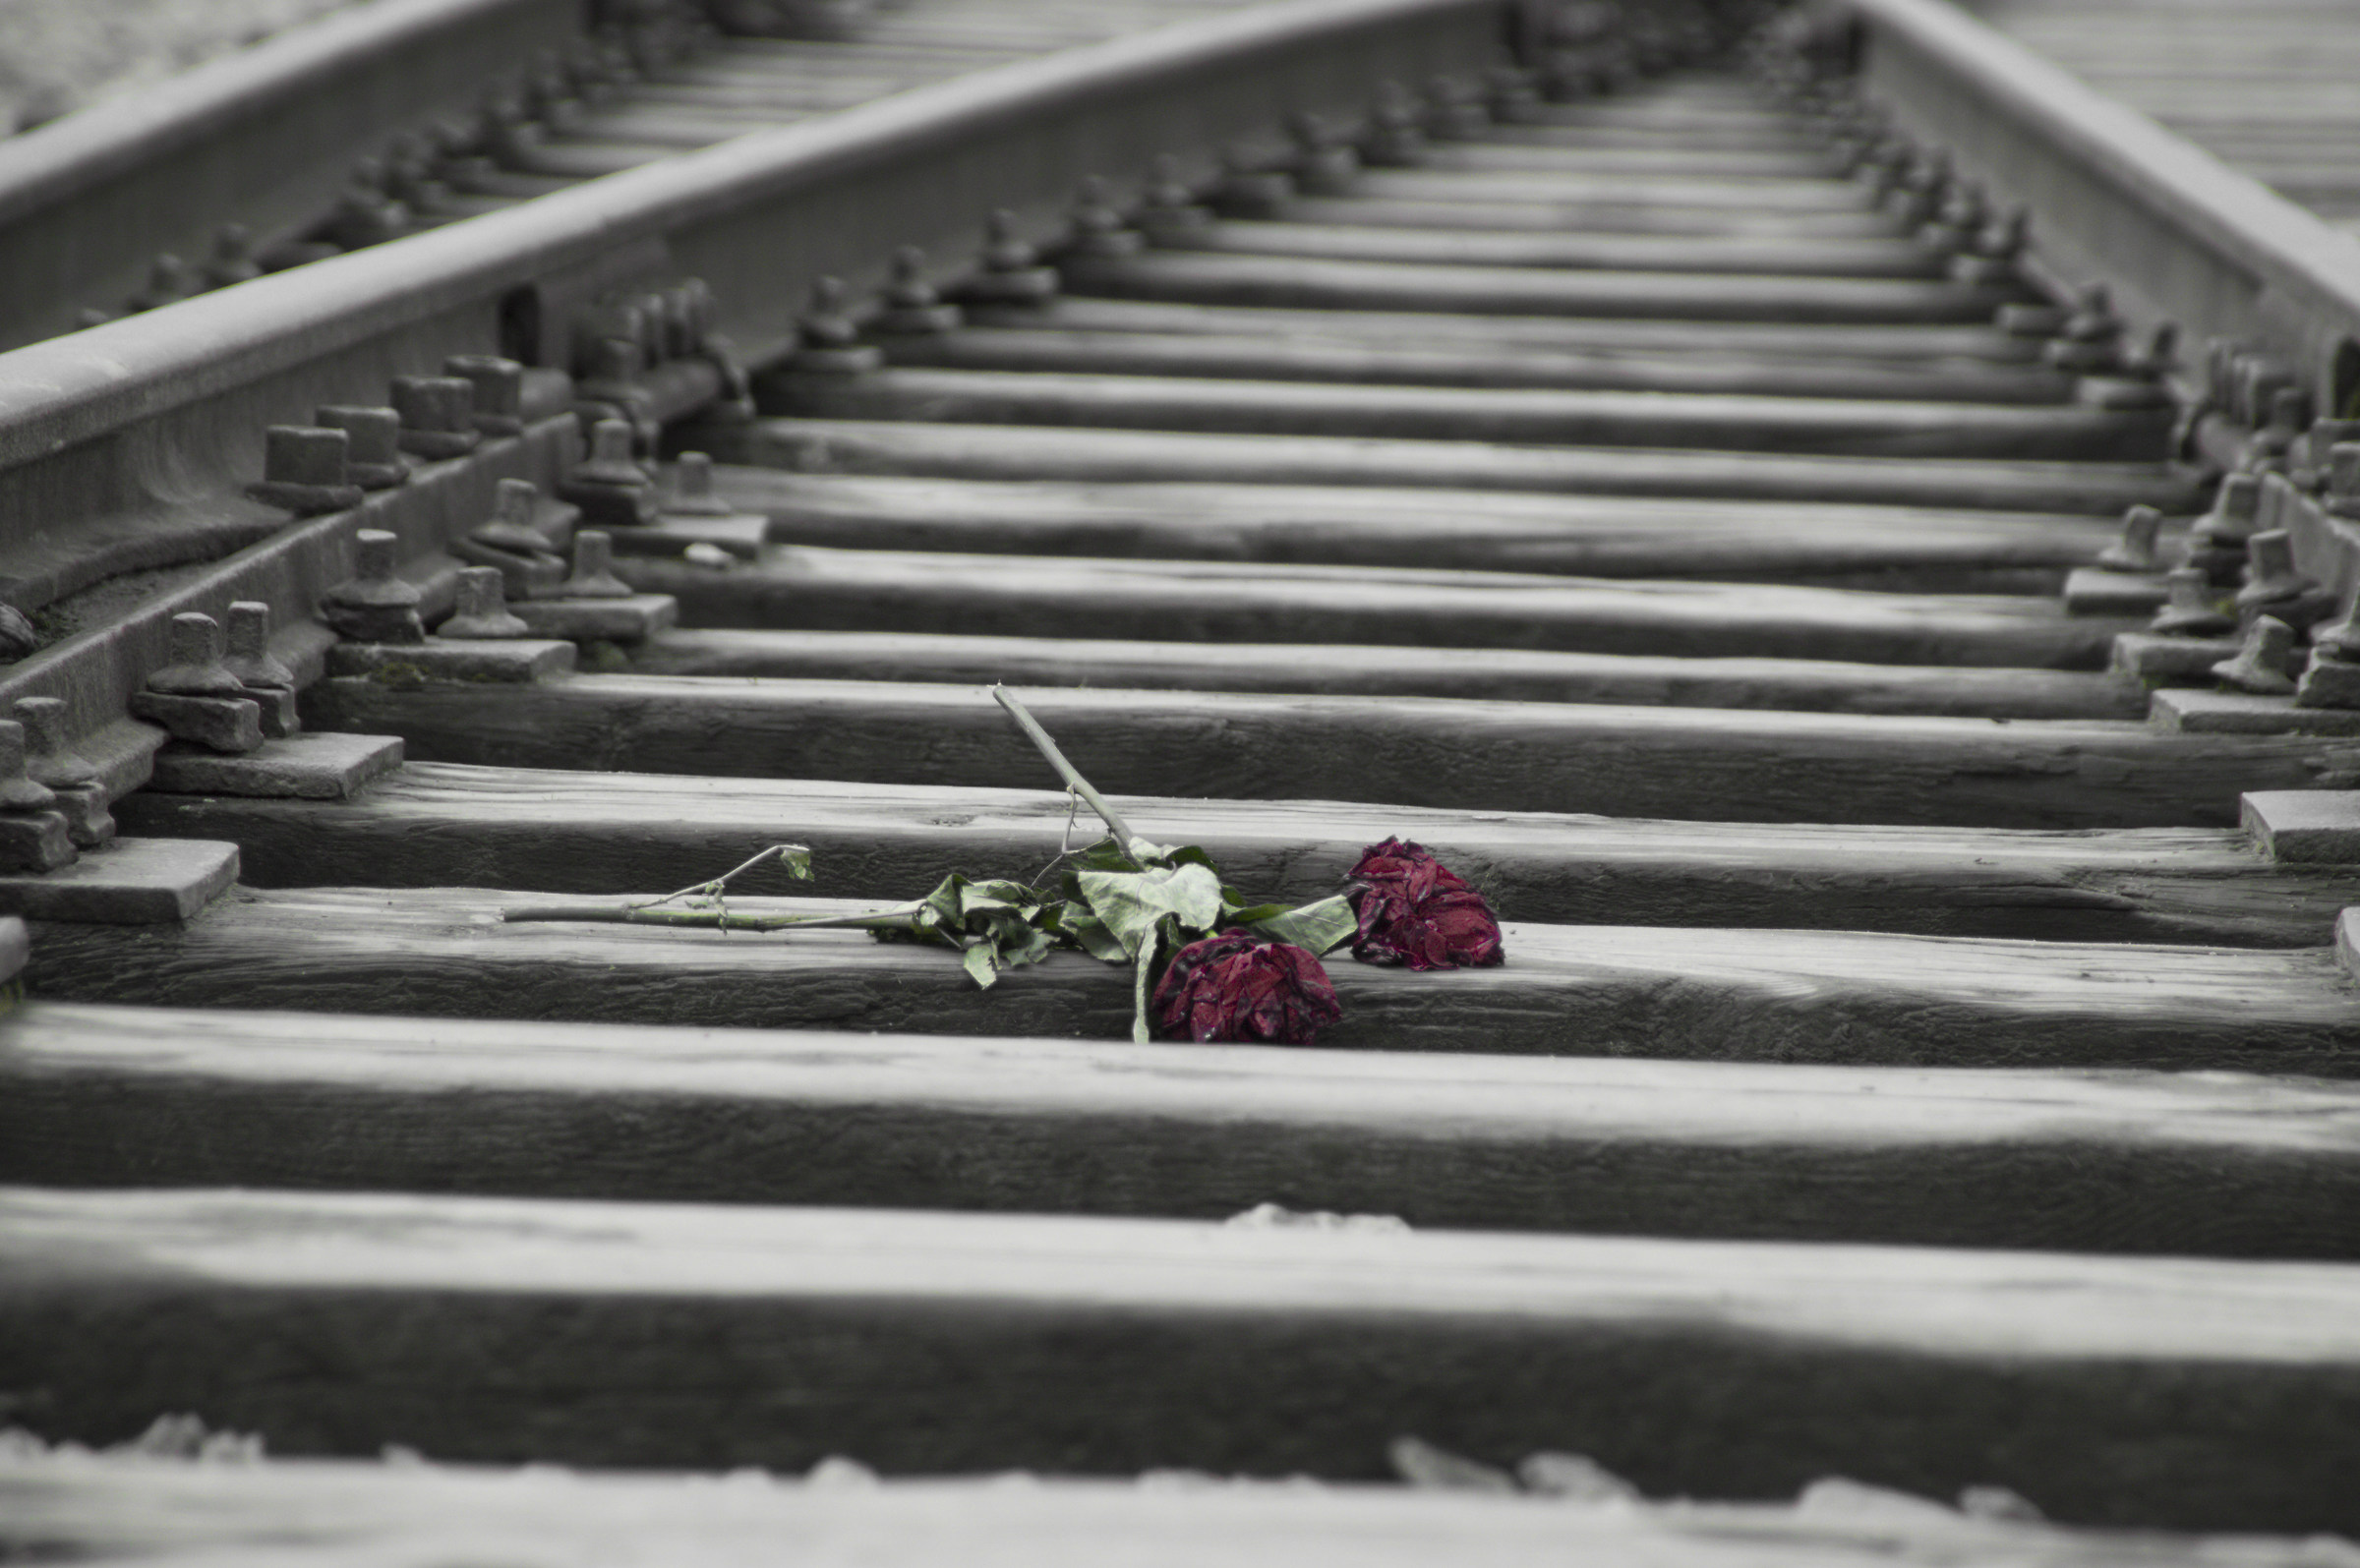 the tracks of death (Birkenau)...